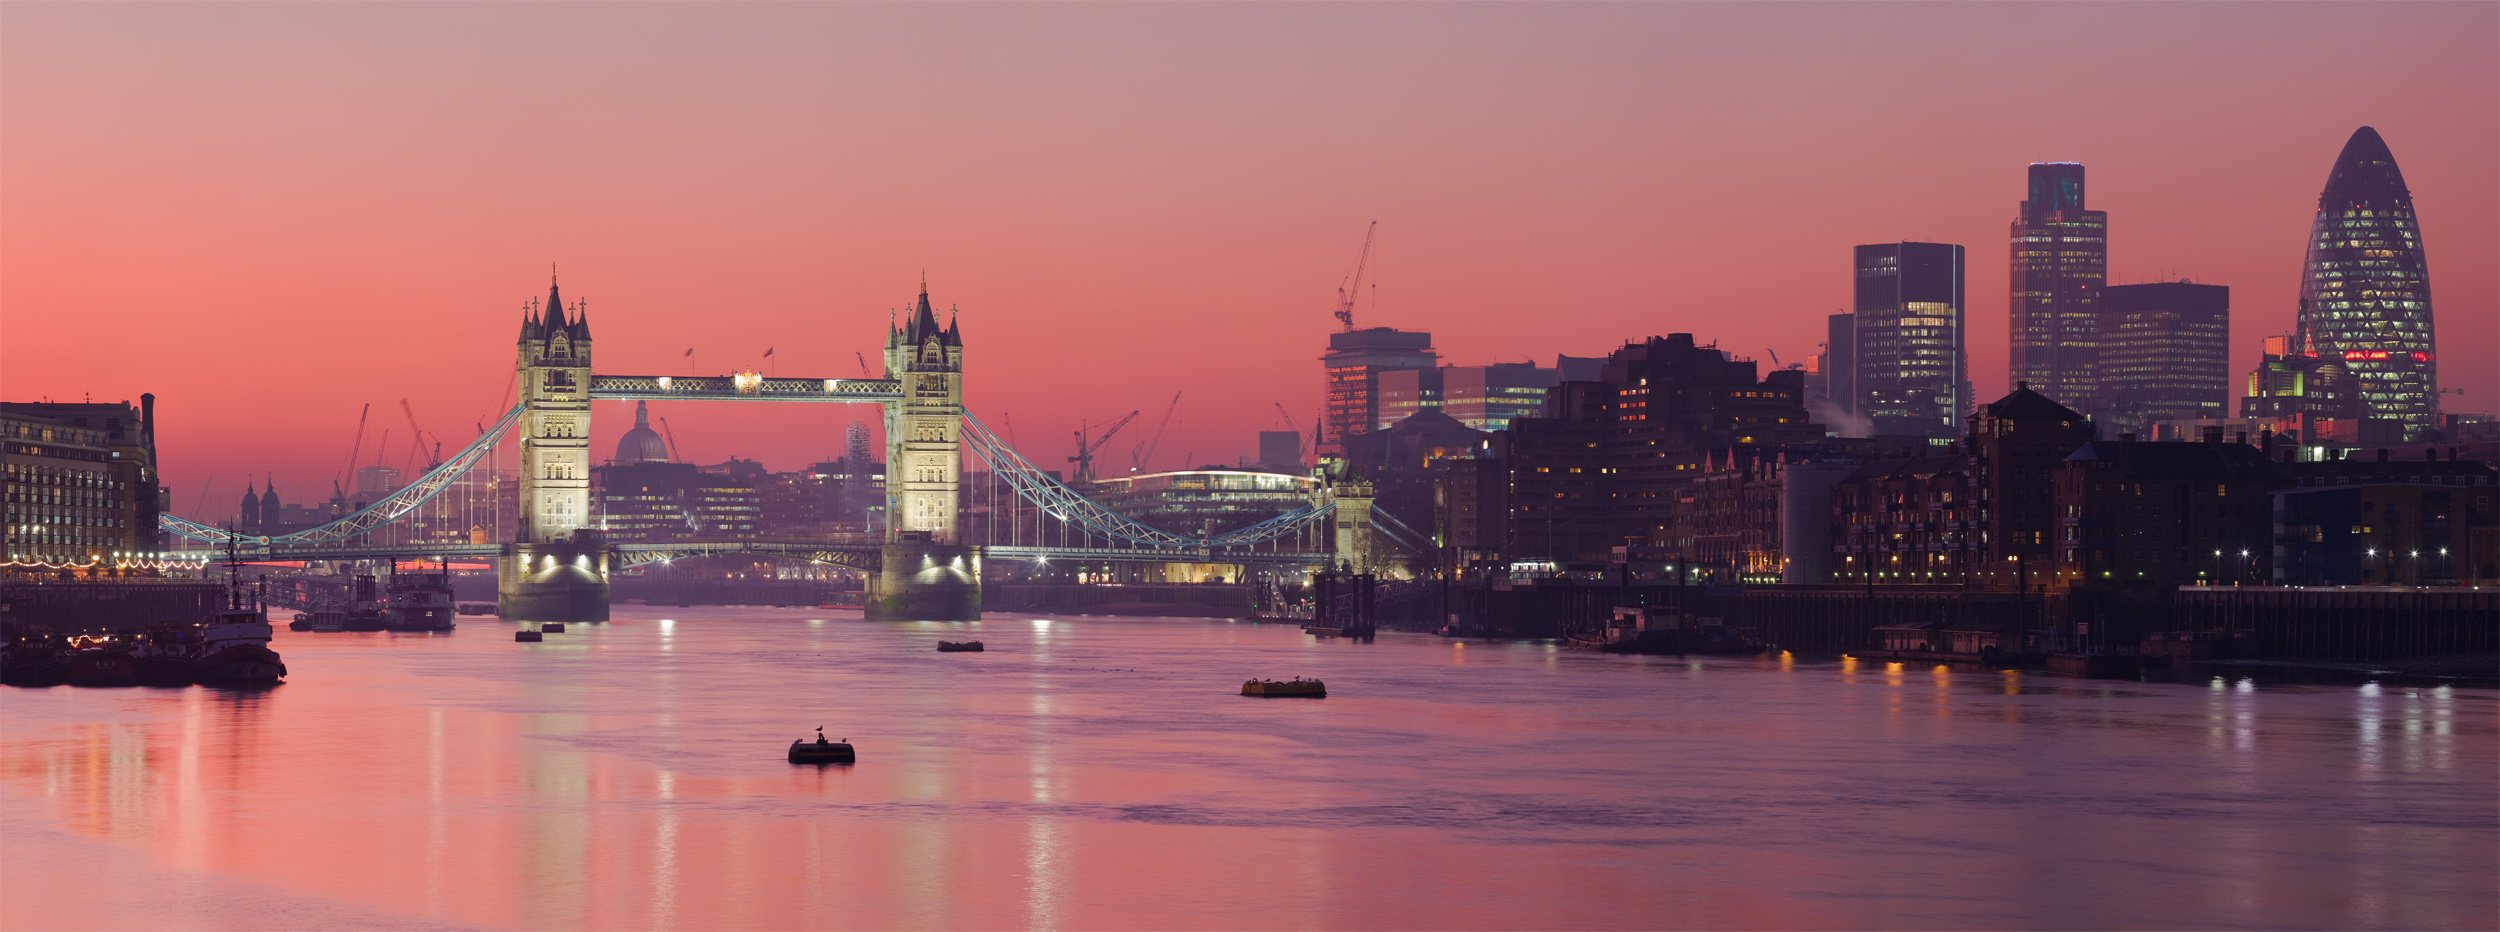 London_Thames_Sunset_panorama_-_Feb_2008